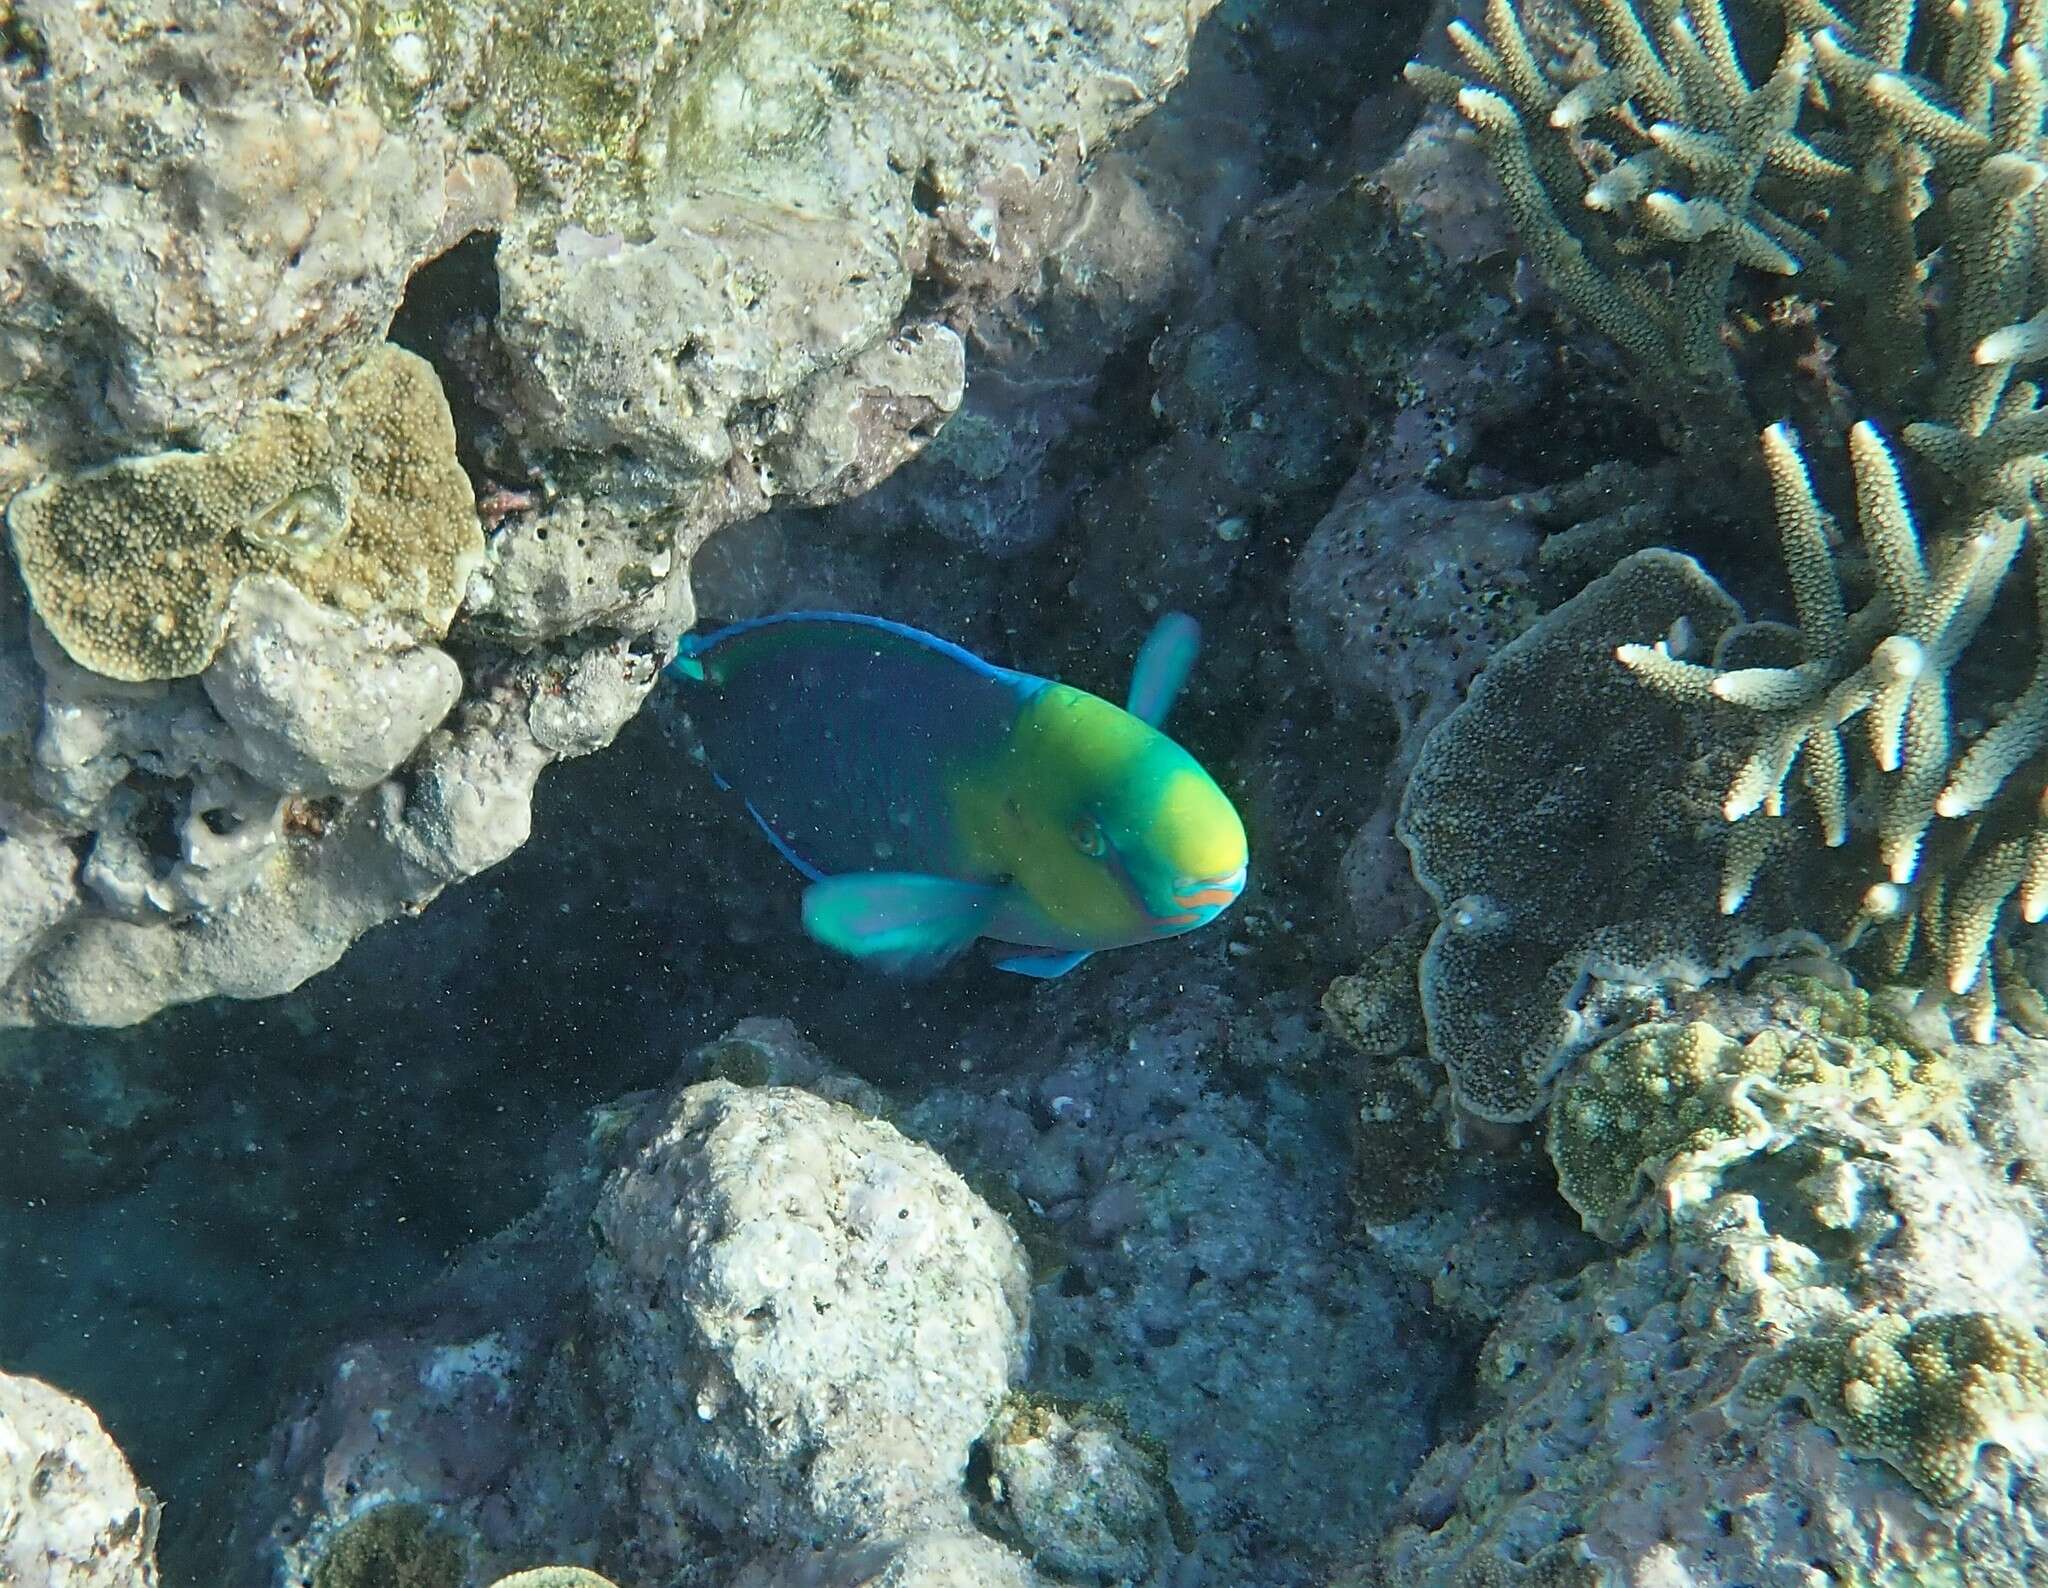 Image of Greensnout parrotfish